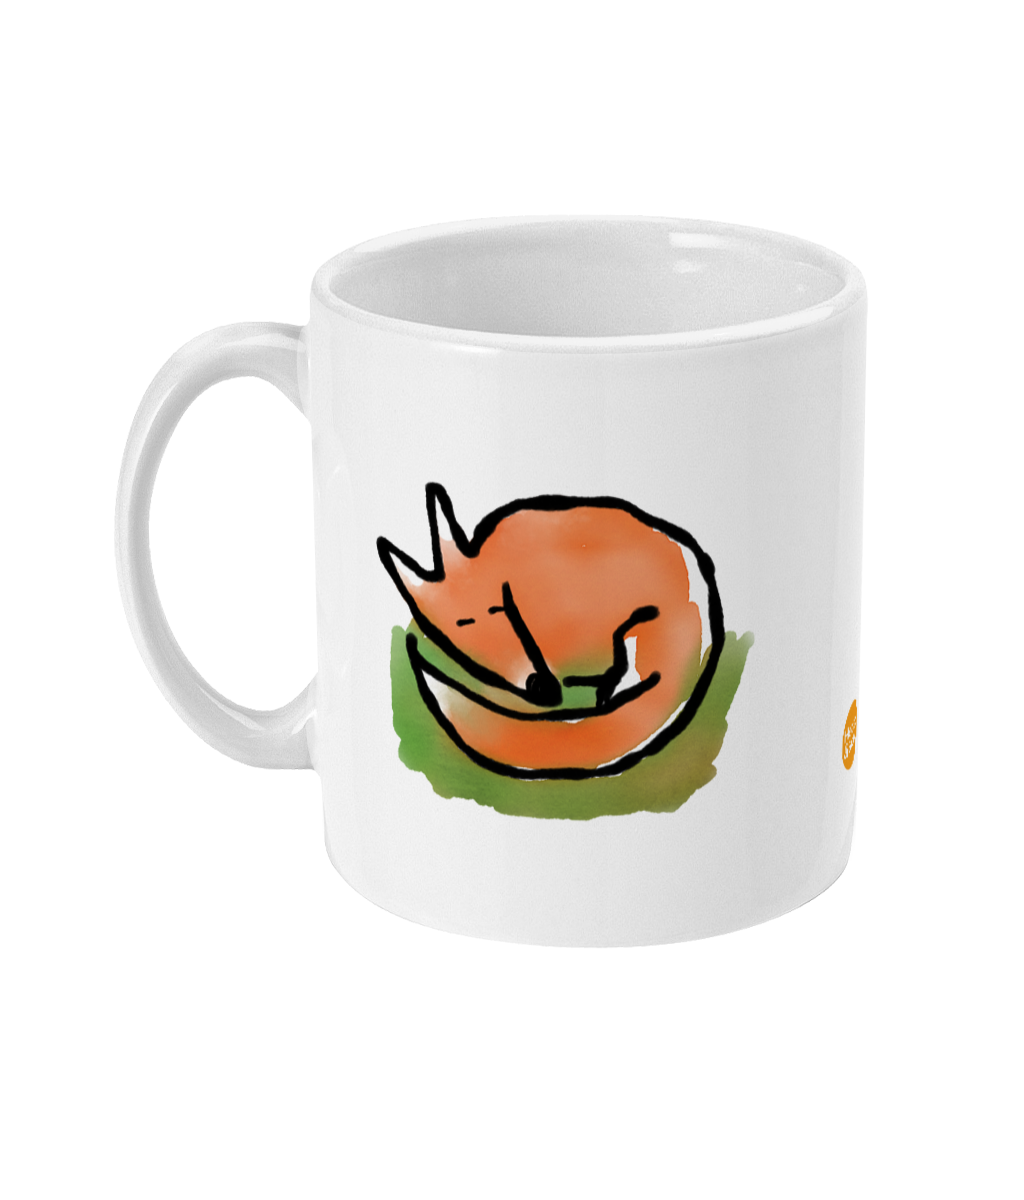 Sleeping Fox Mug - Cute Fox coffee mugs illustrated by Hector and Bone Left View